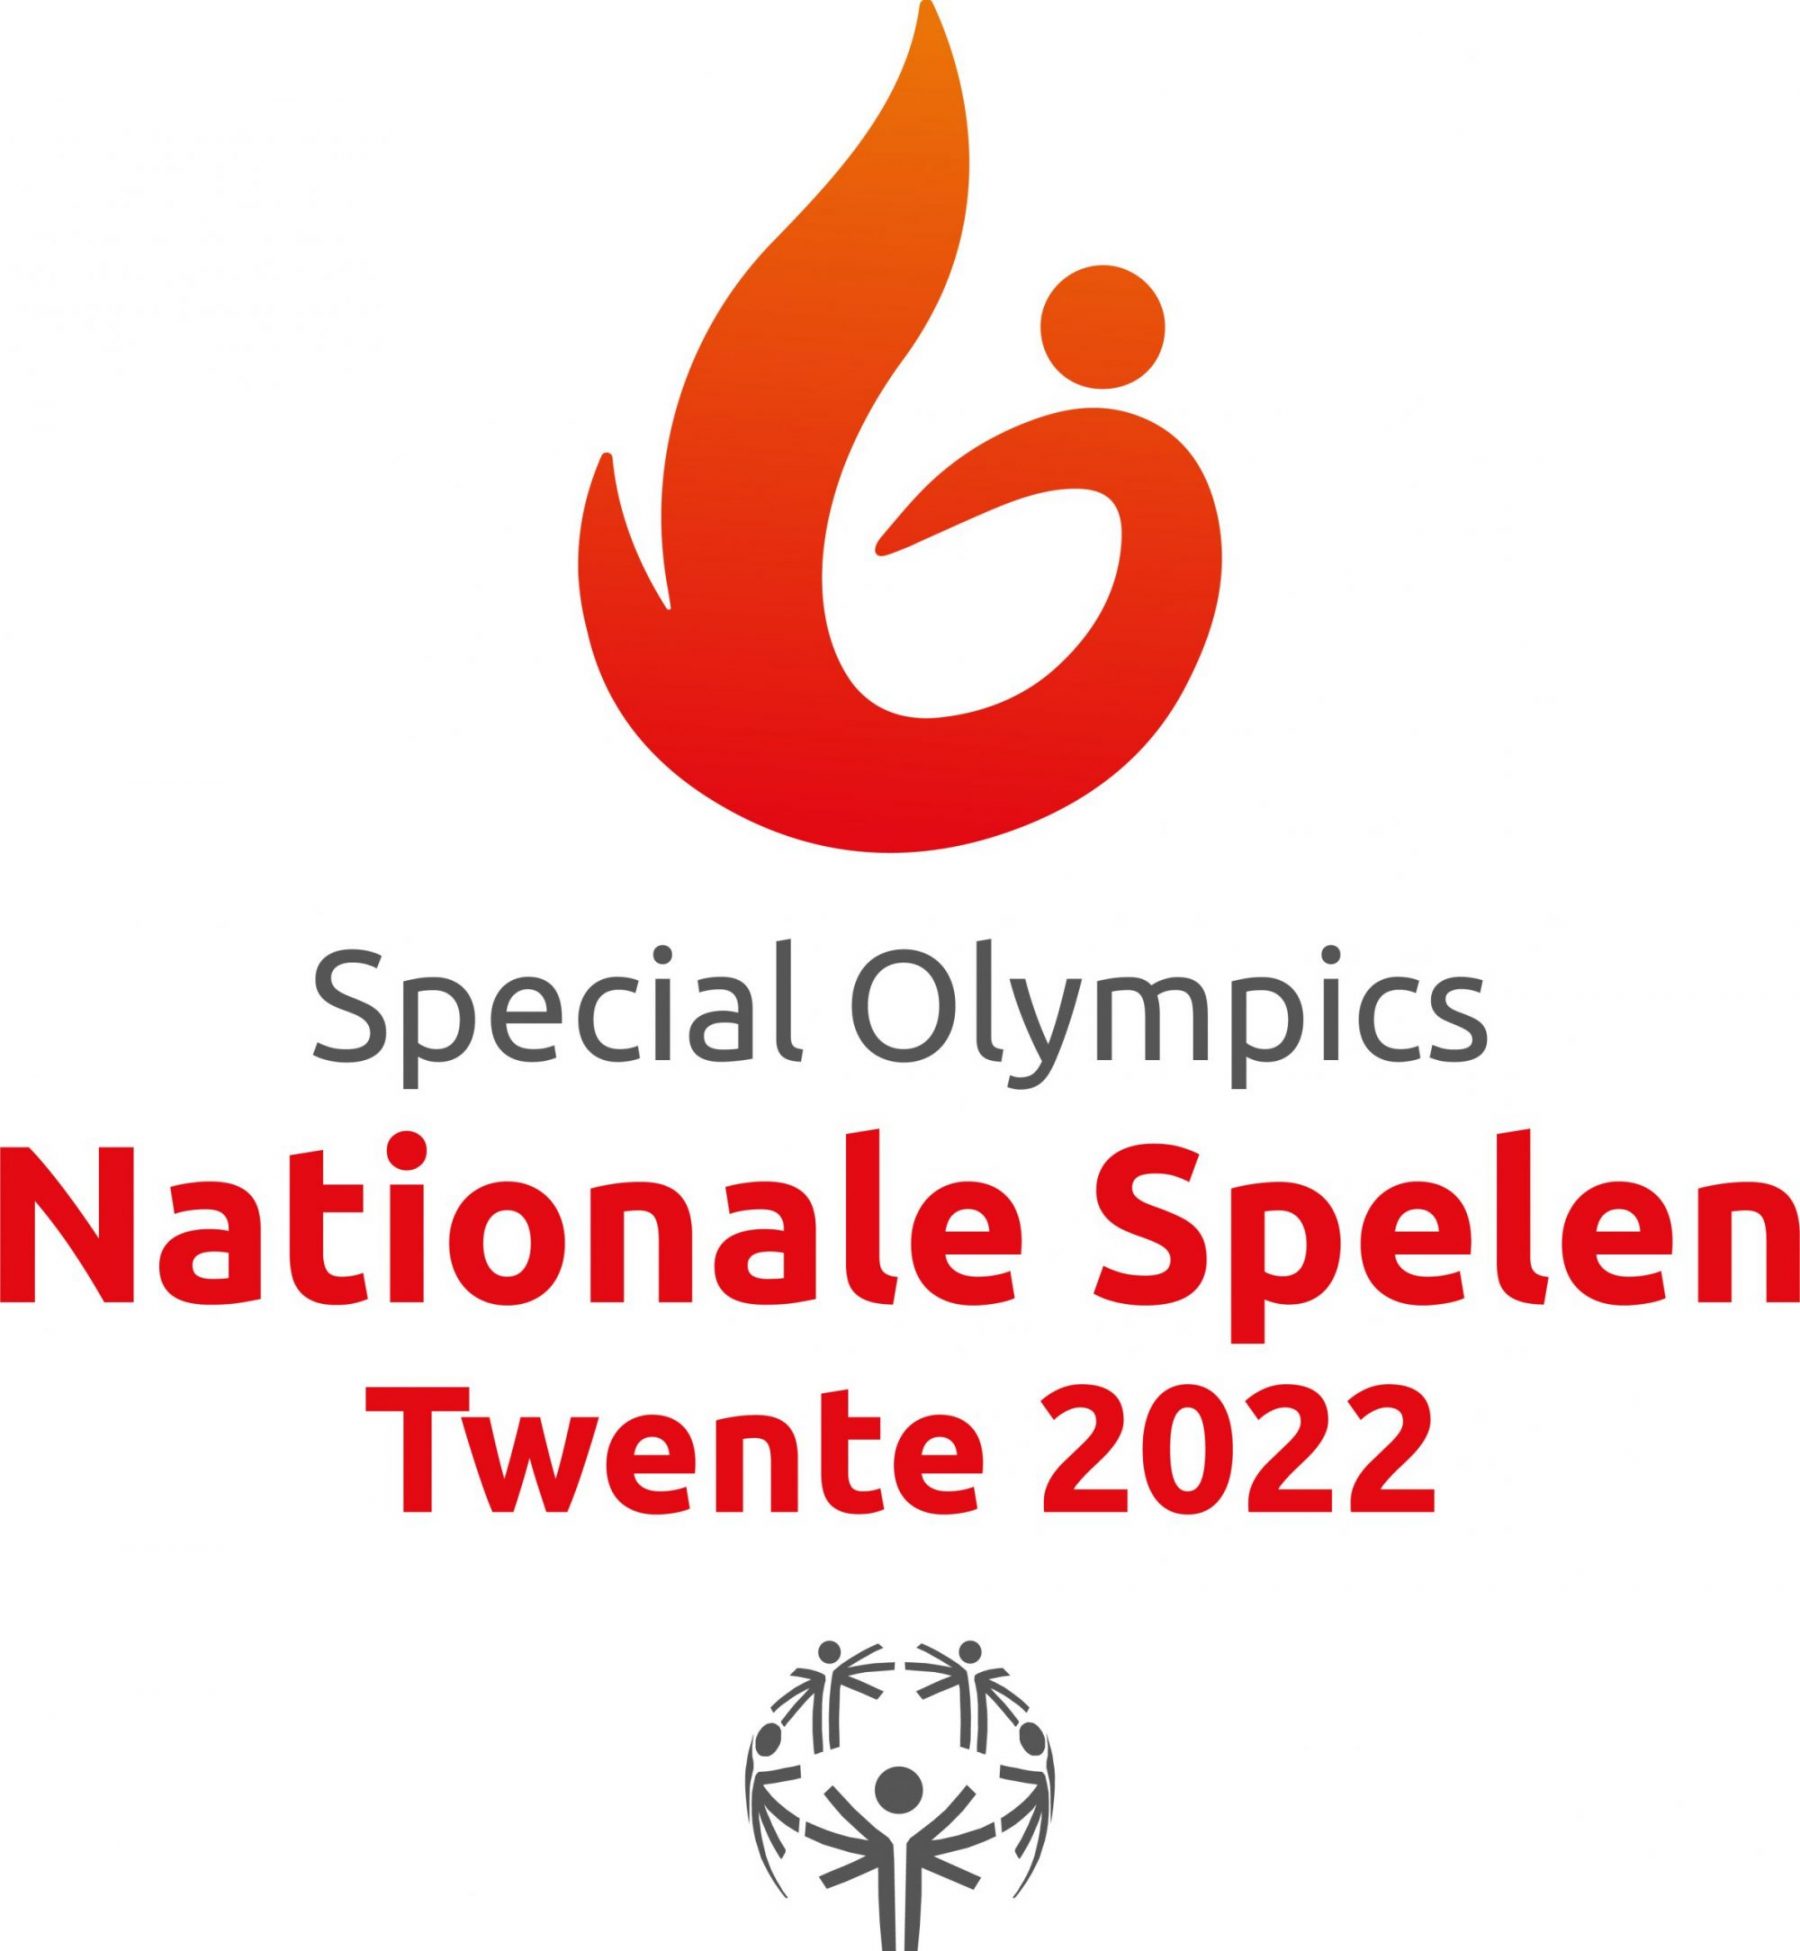 Podotherapie de Boer - Special Olympics 2022